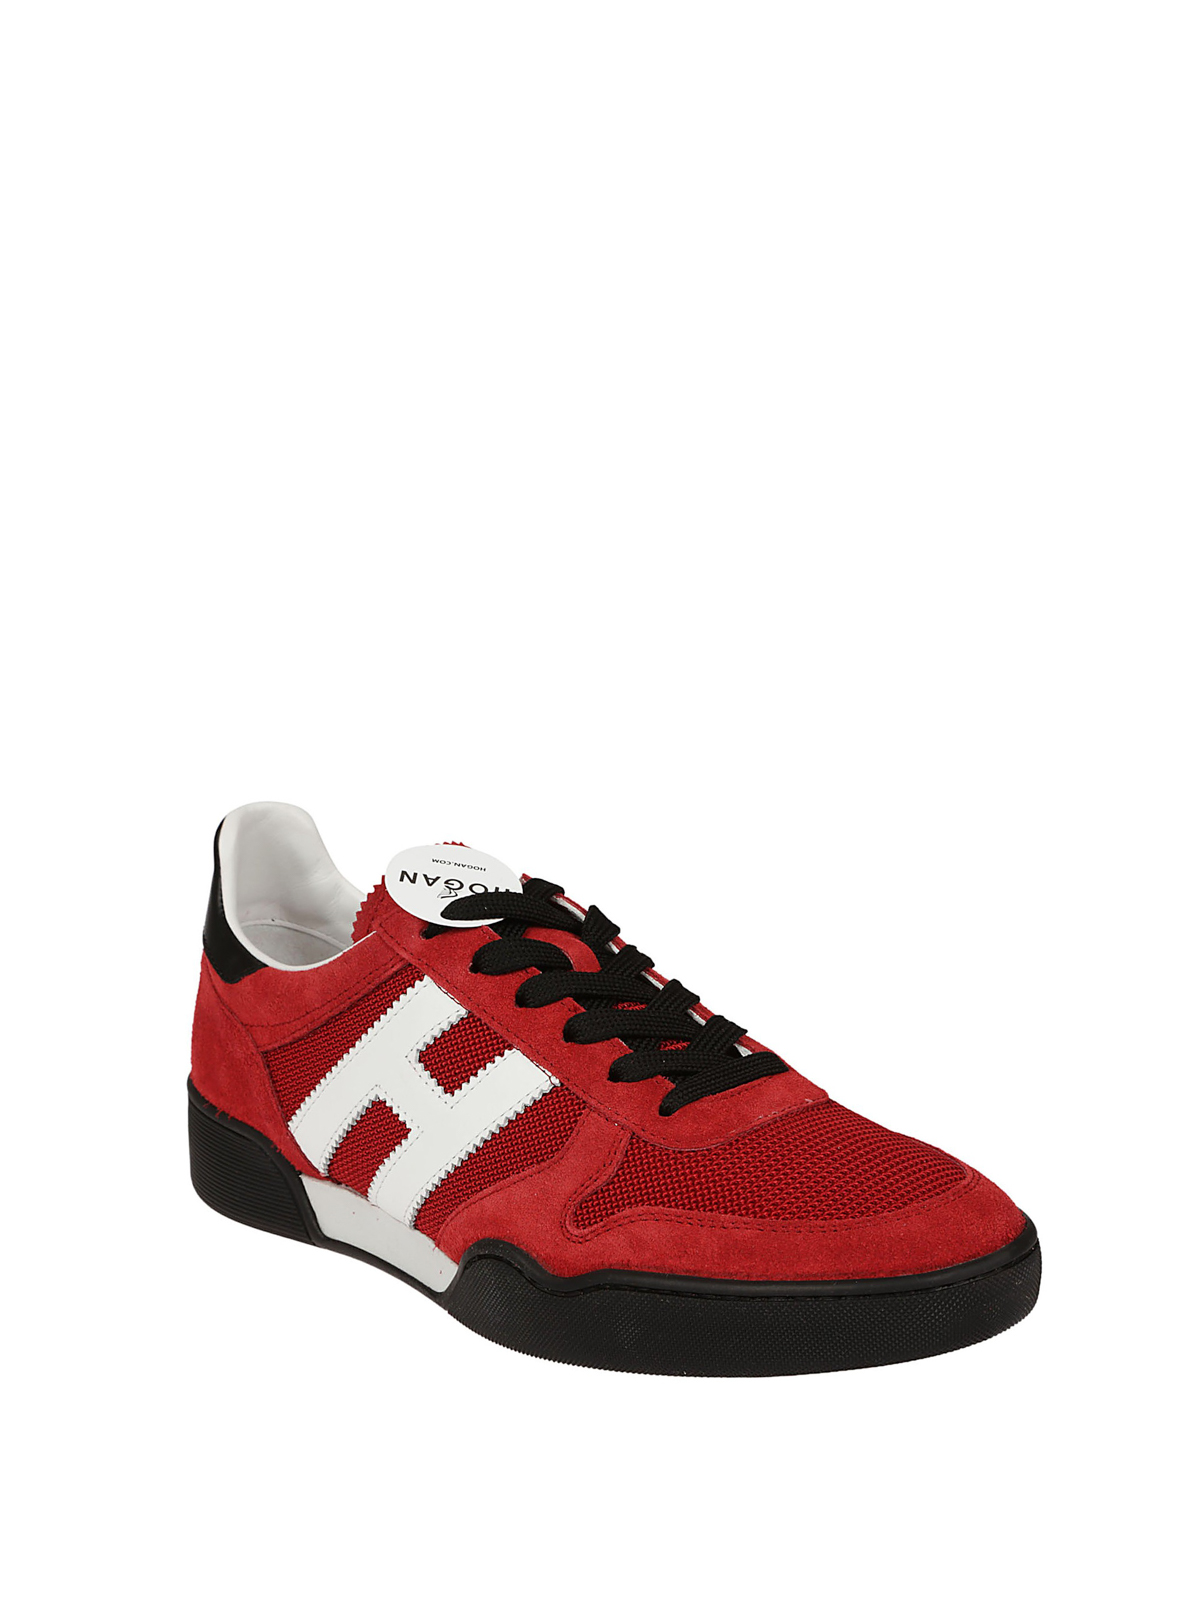 Hogan - Sneaker H357 rosse in suede e rete - sneakers - HXM3570AC40IPJ879Y